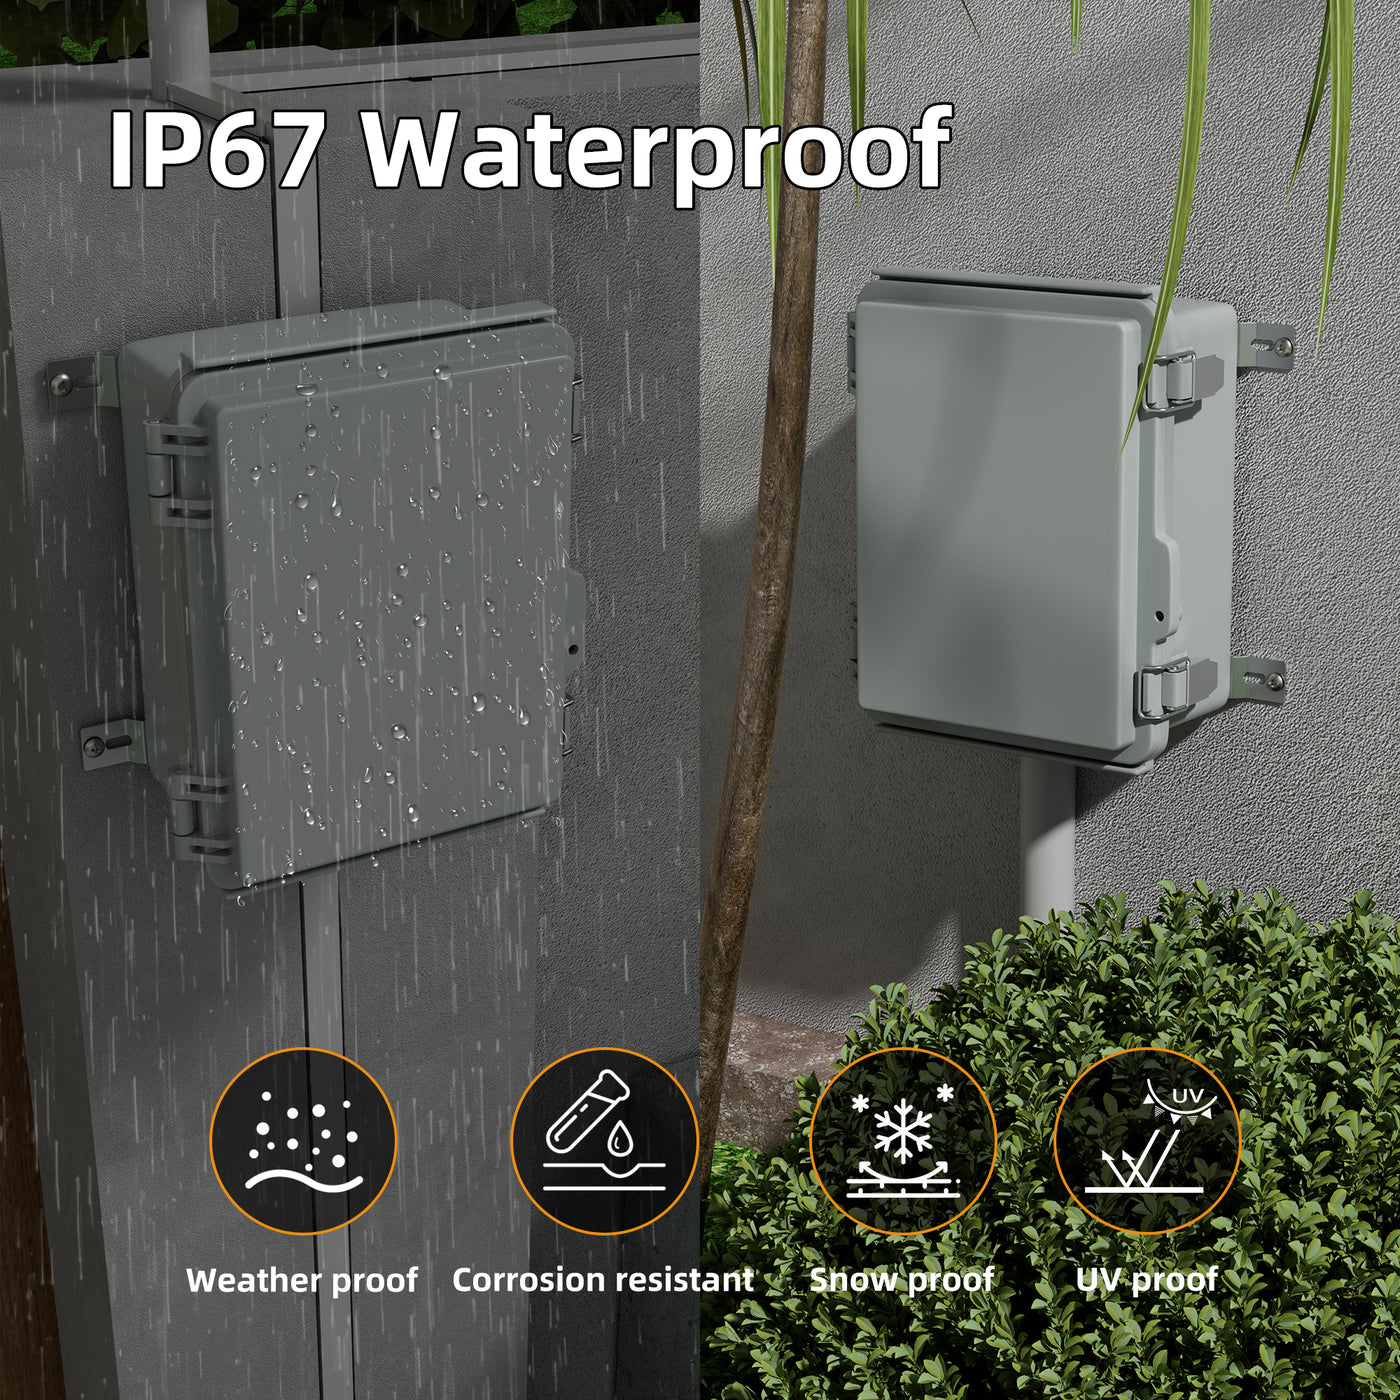 IP67 Weatherproof Plastic Outdoor Electrical Enclosure Box - 8.7"x6.7"x4.3" - DAIER